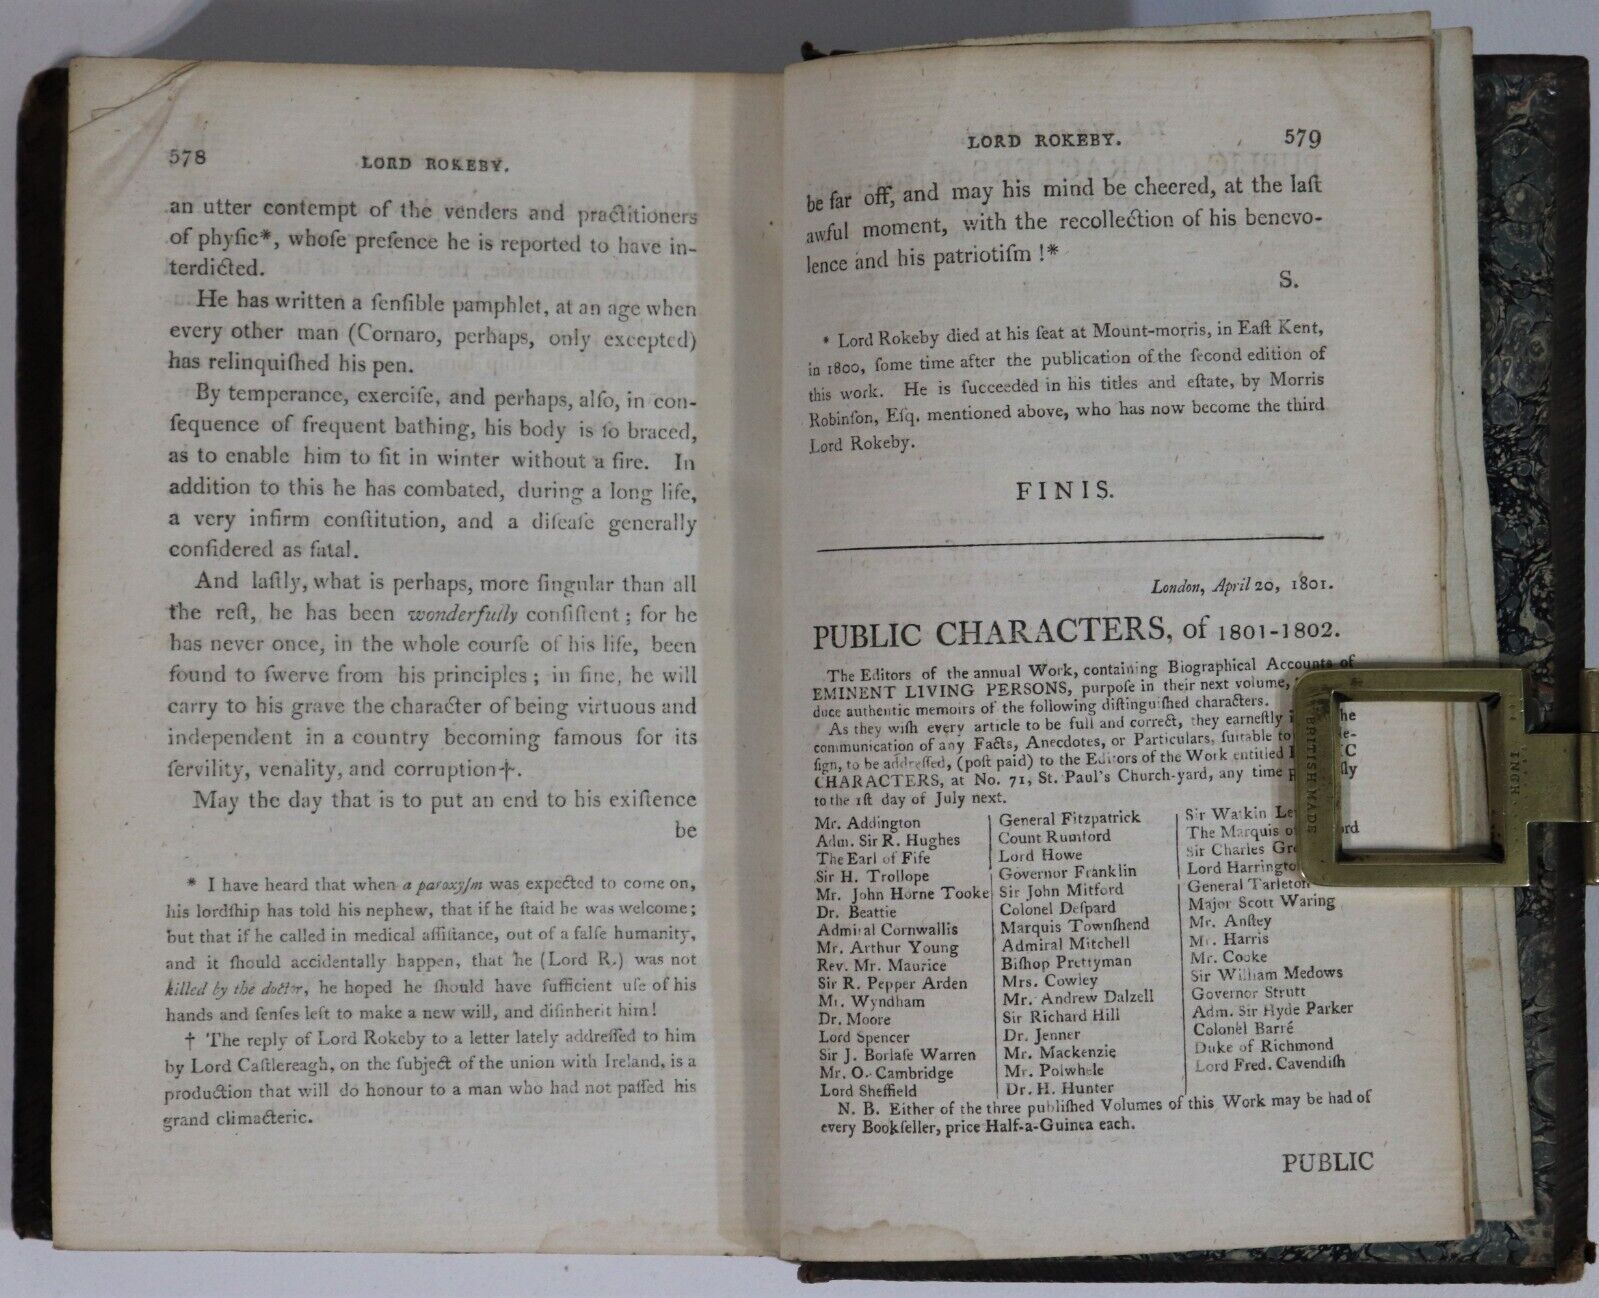 1798-1807 8vol British Public Characters: R Phillips Antiquarian Book Set